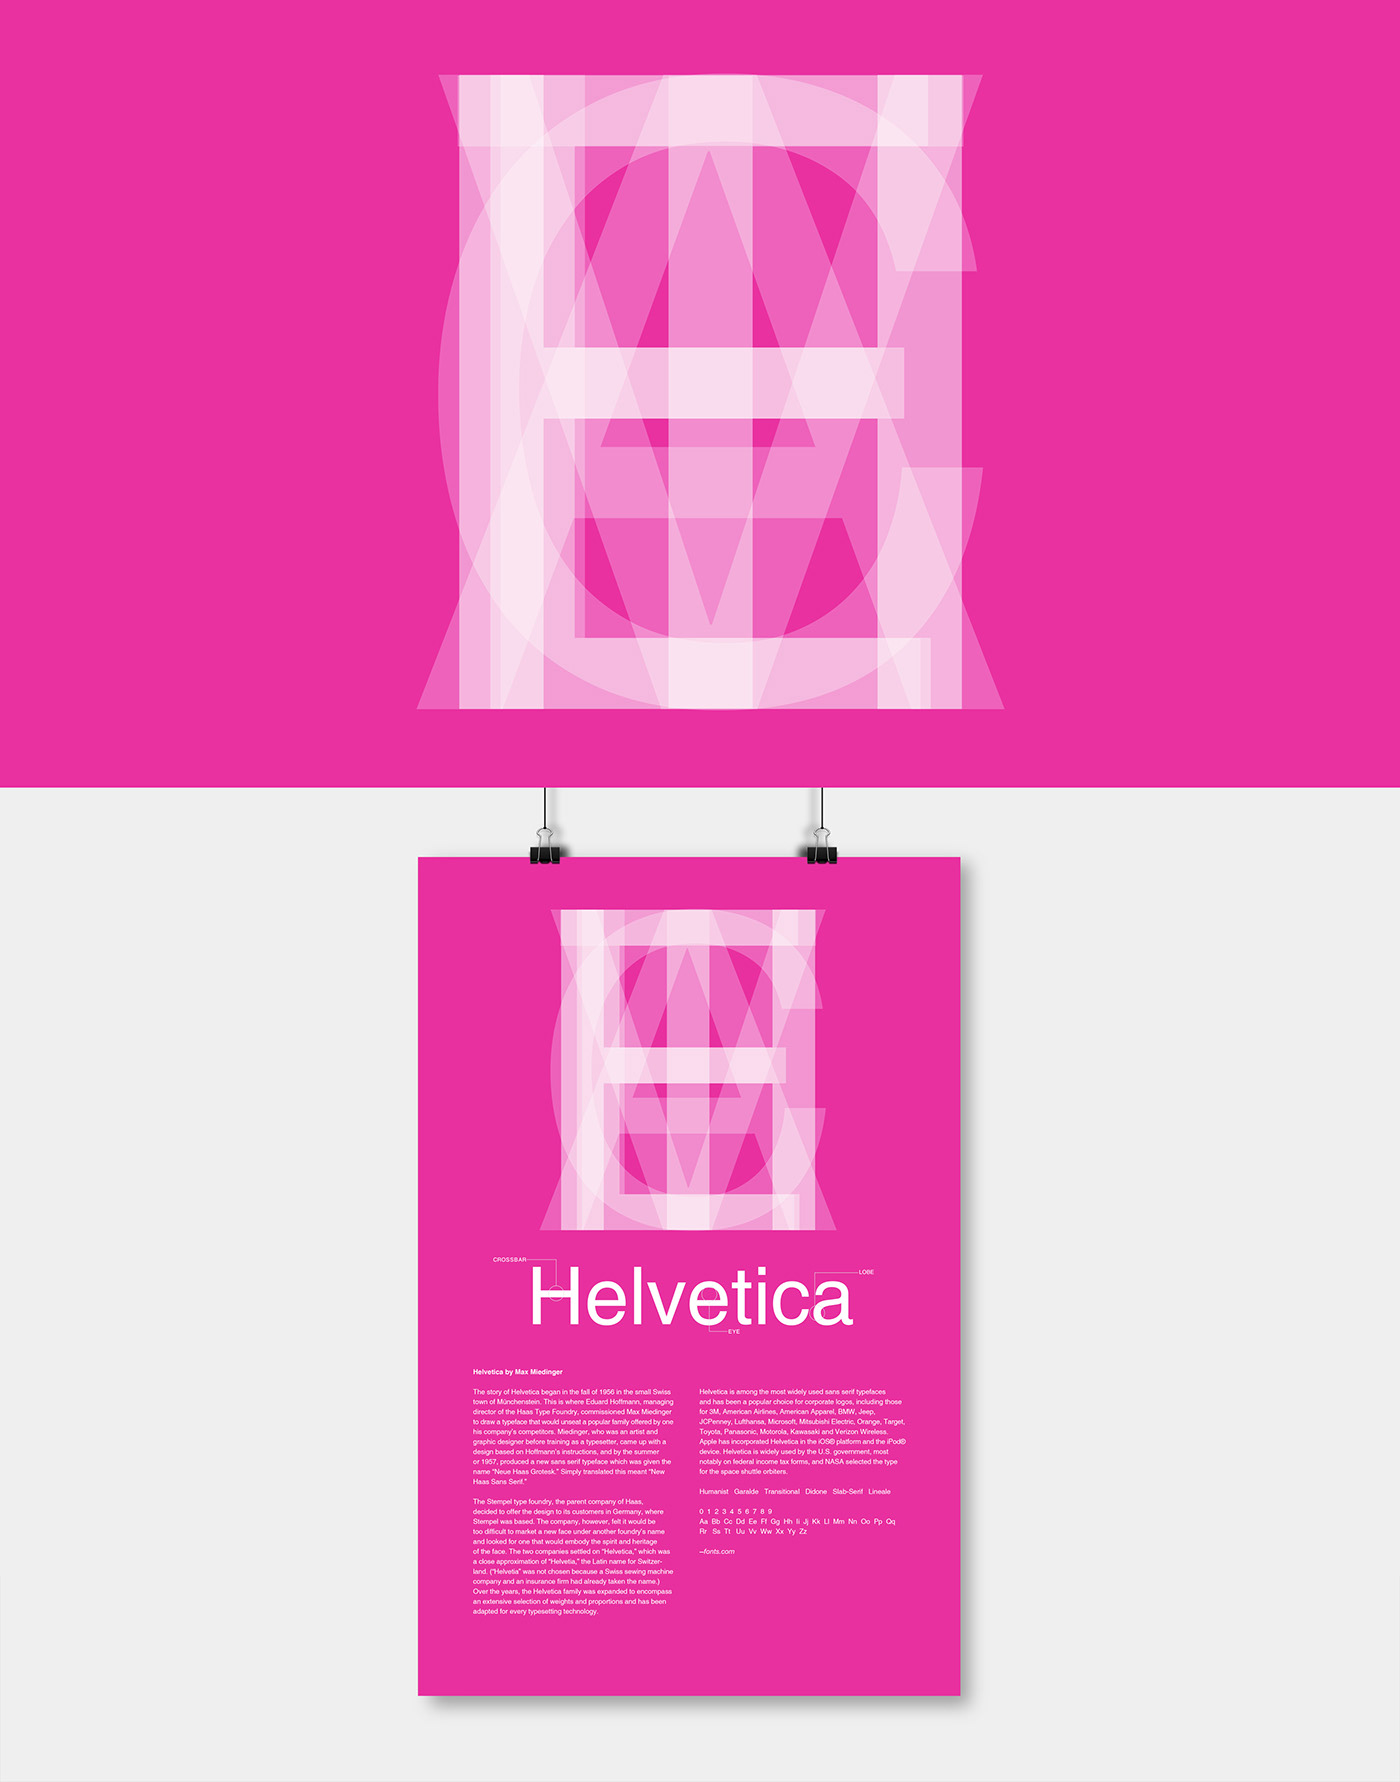 poster typeclassification helvetica gillsans Futura typography   graphic design  Poster series Poster Design visual design